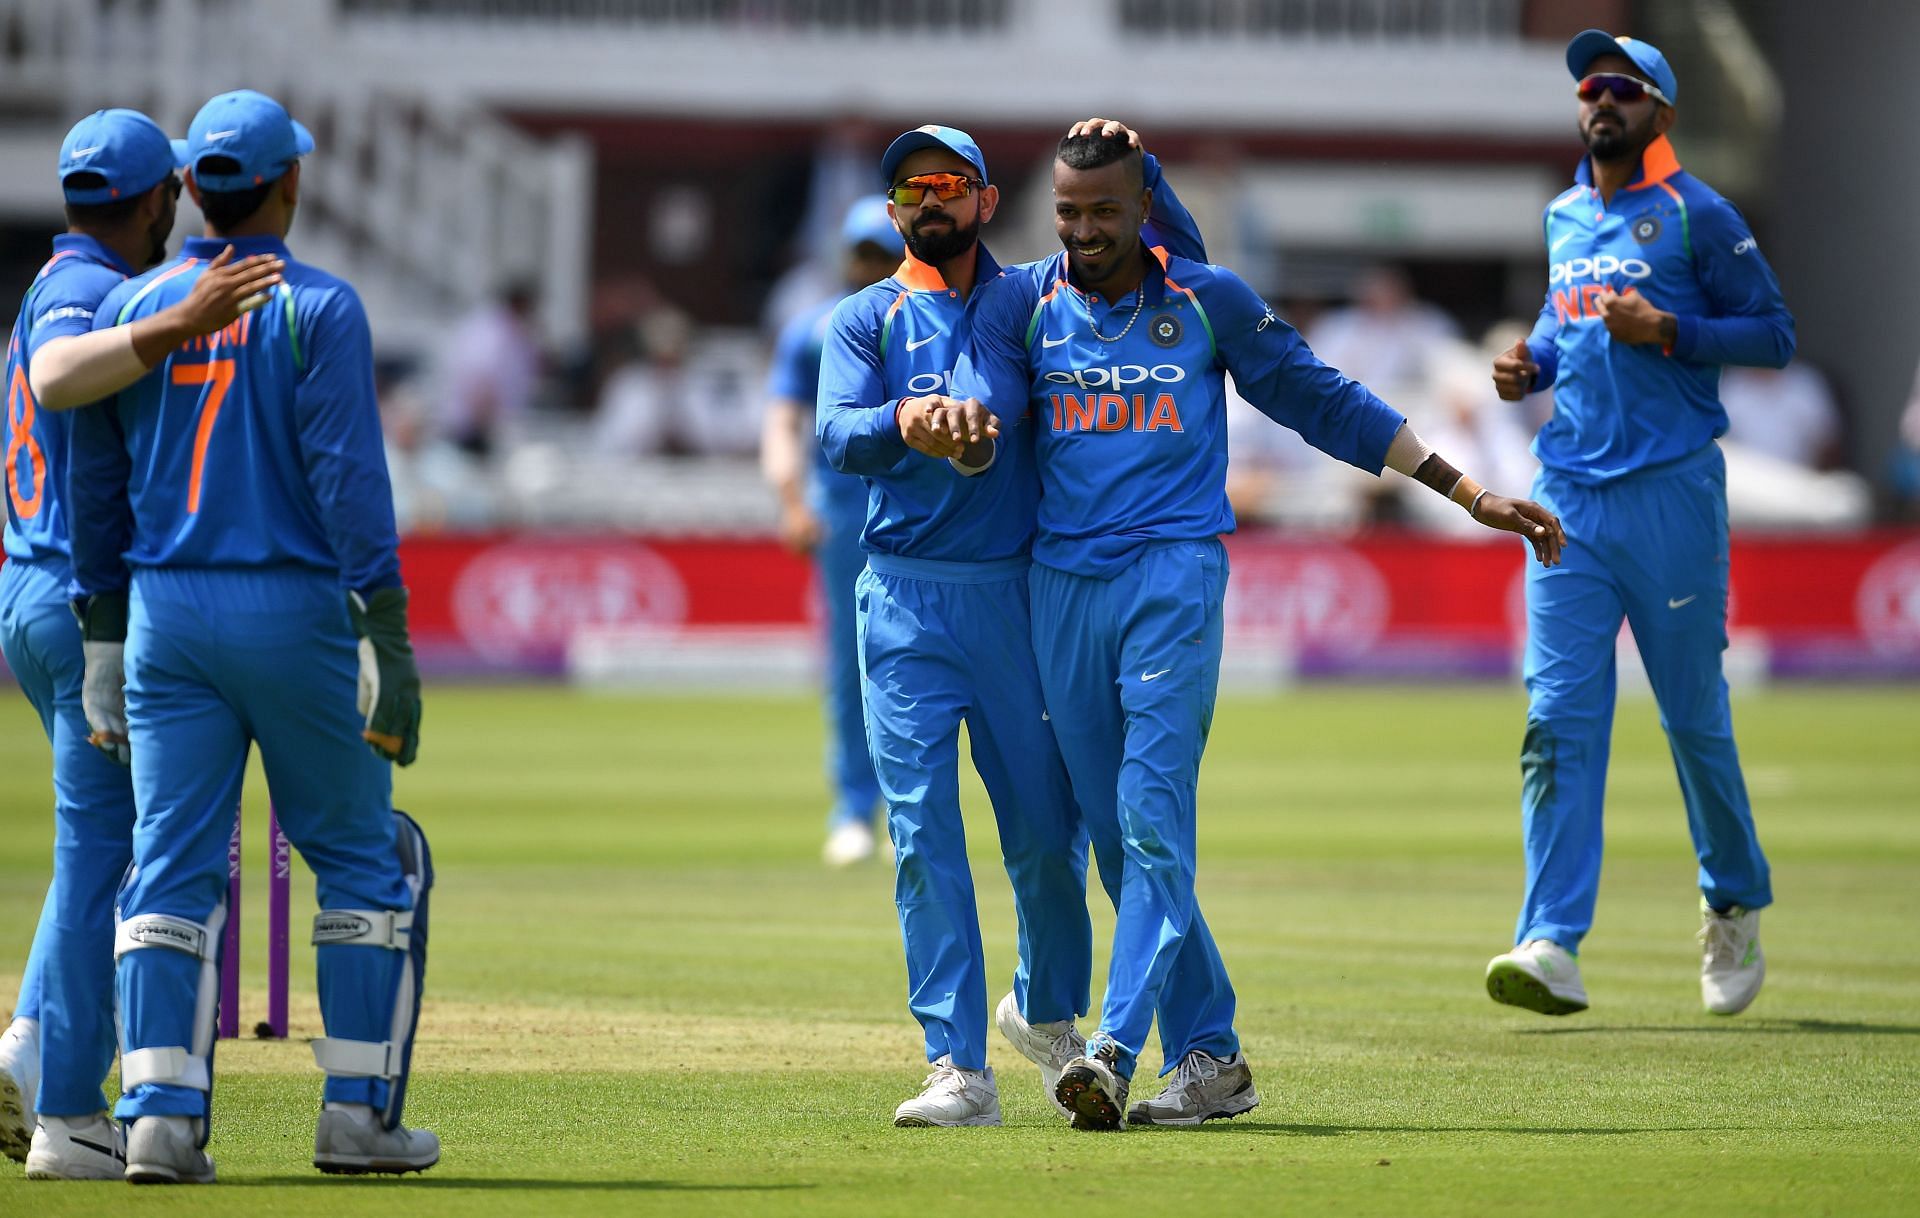 Hardik Pandya will lead India in the upcoming series against Ireland